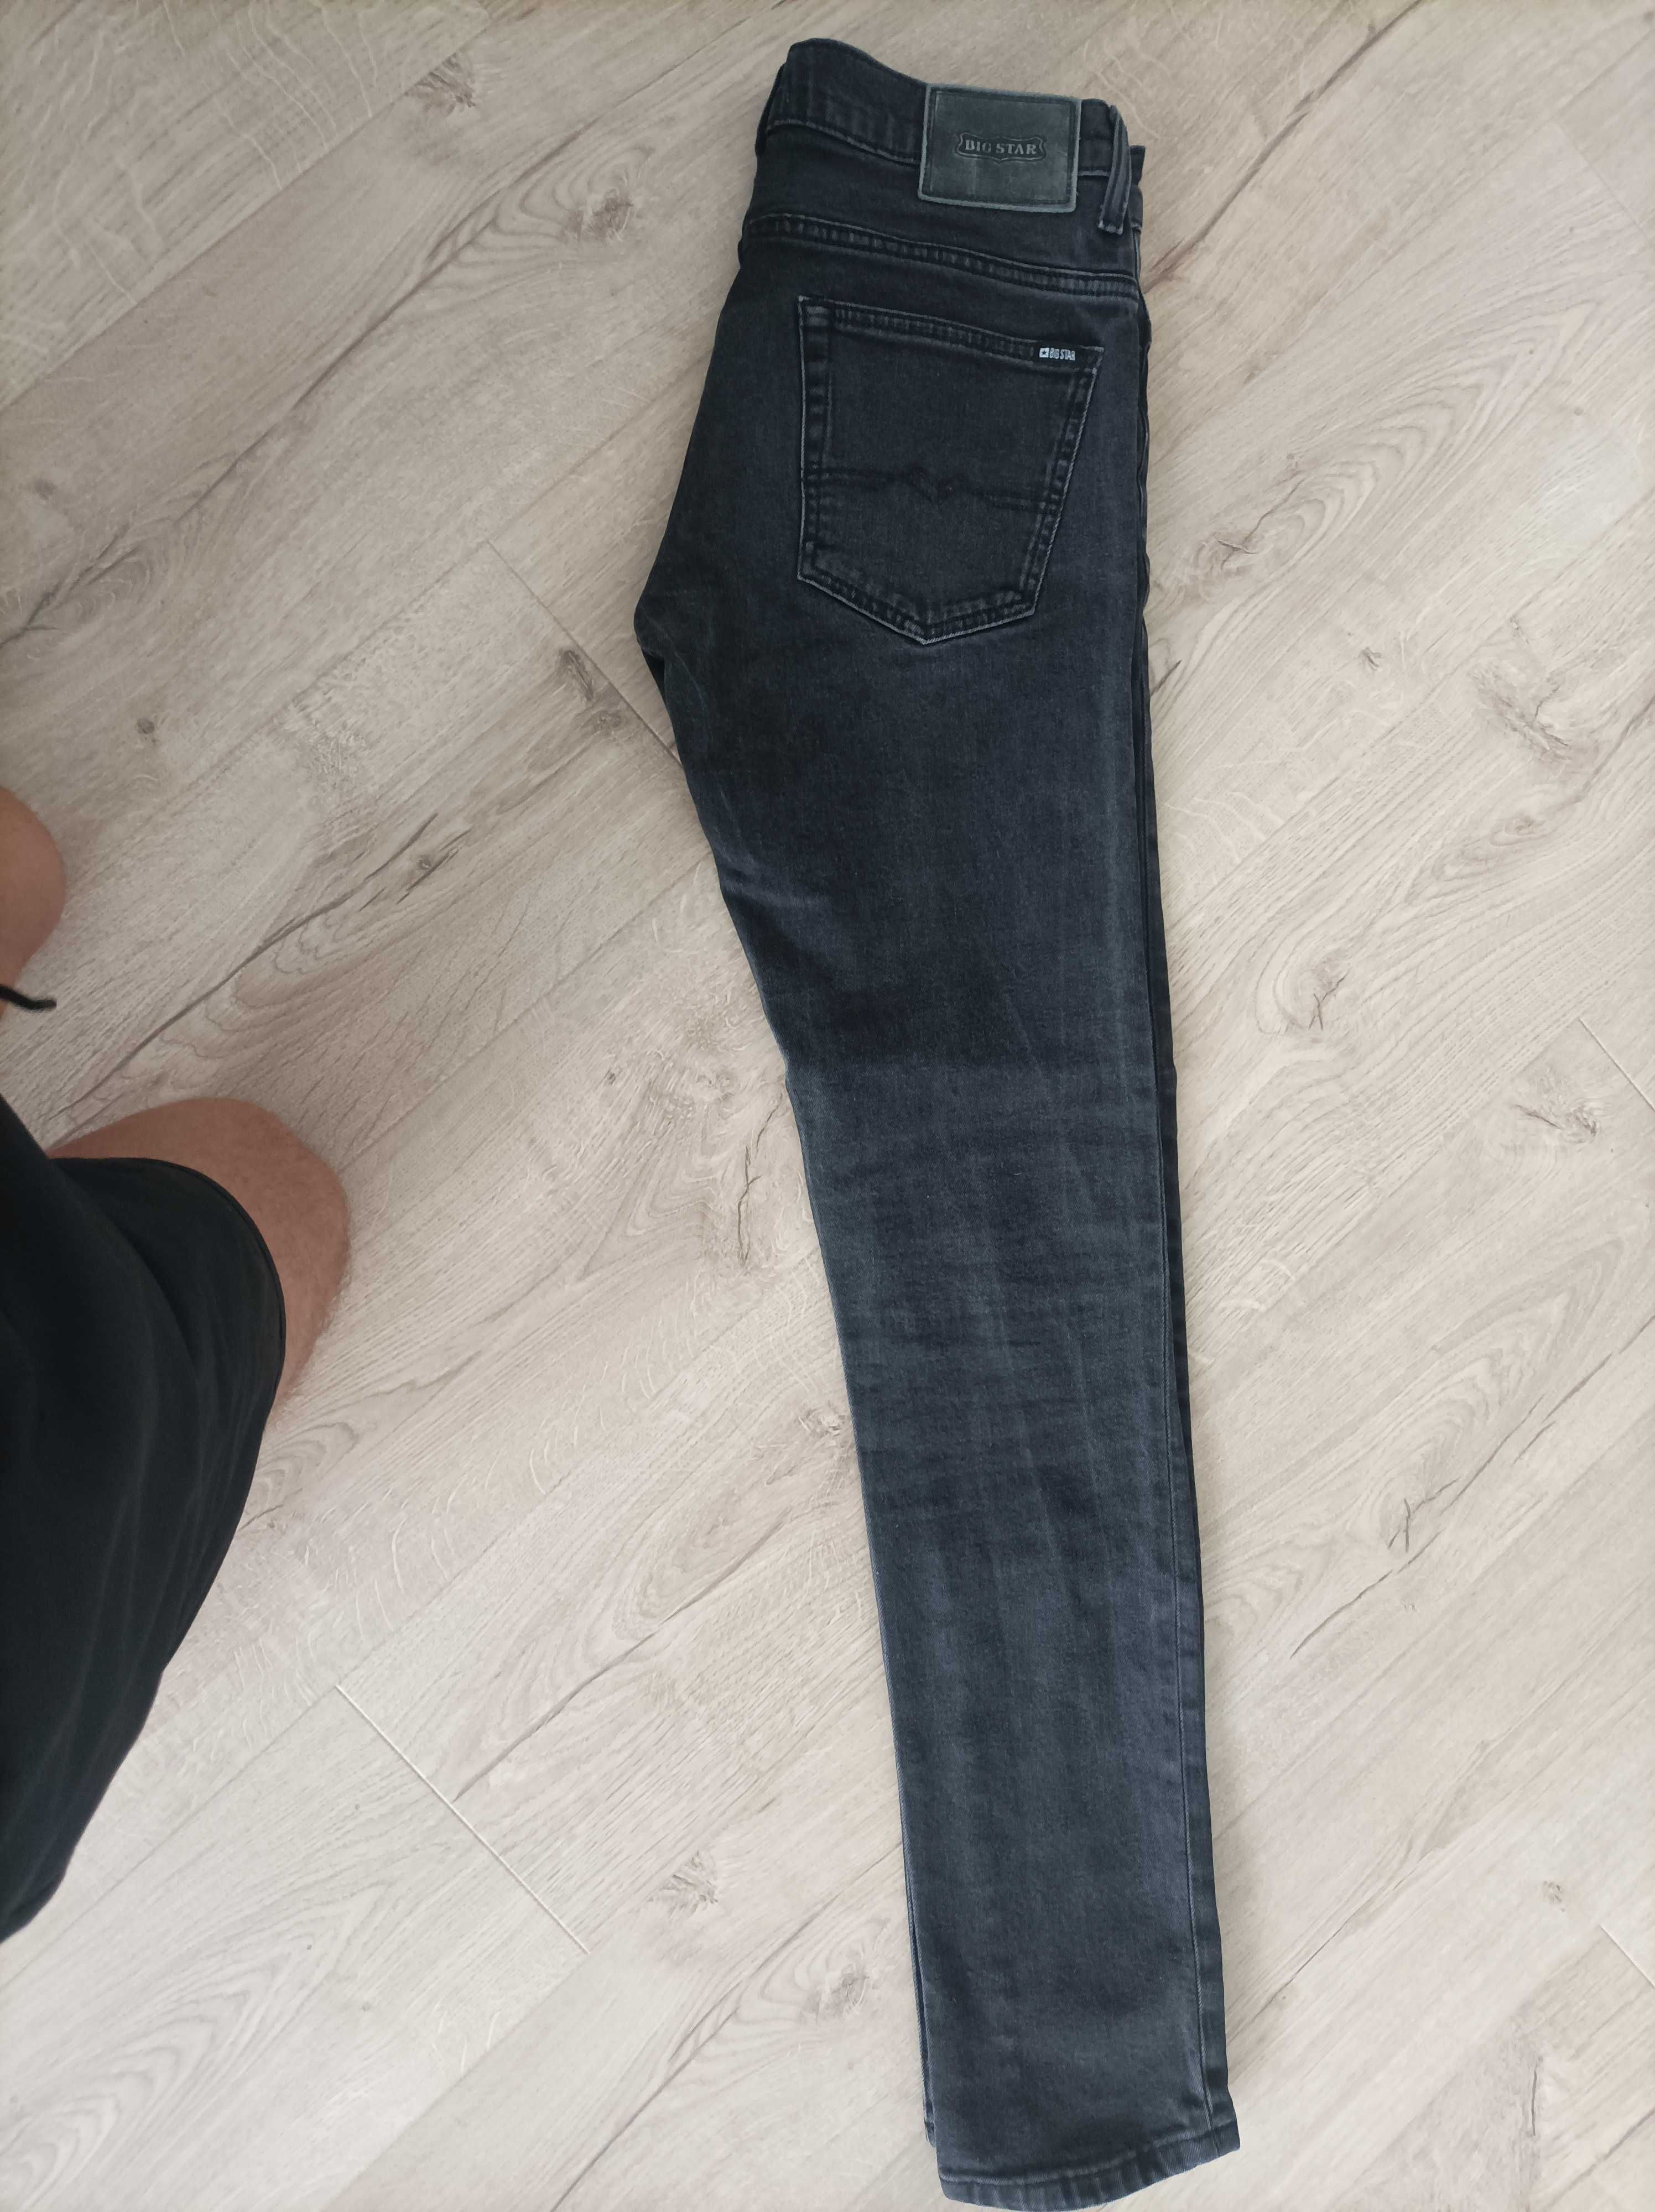 Spodnie big star jeansy 30/32 Super oferta!